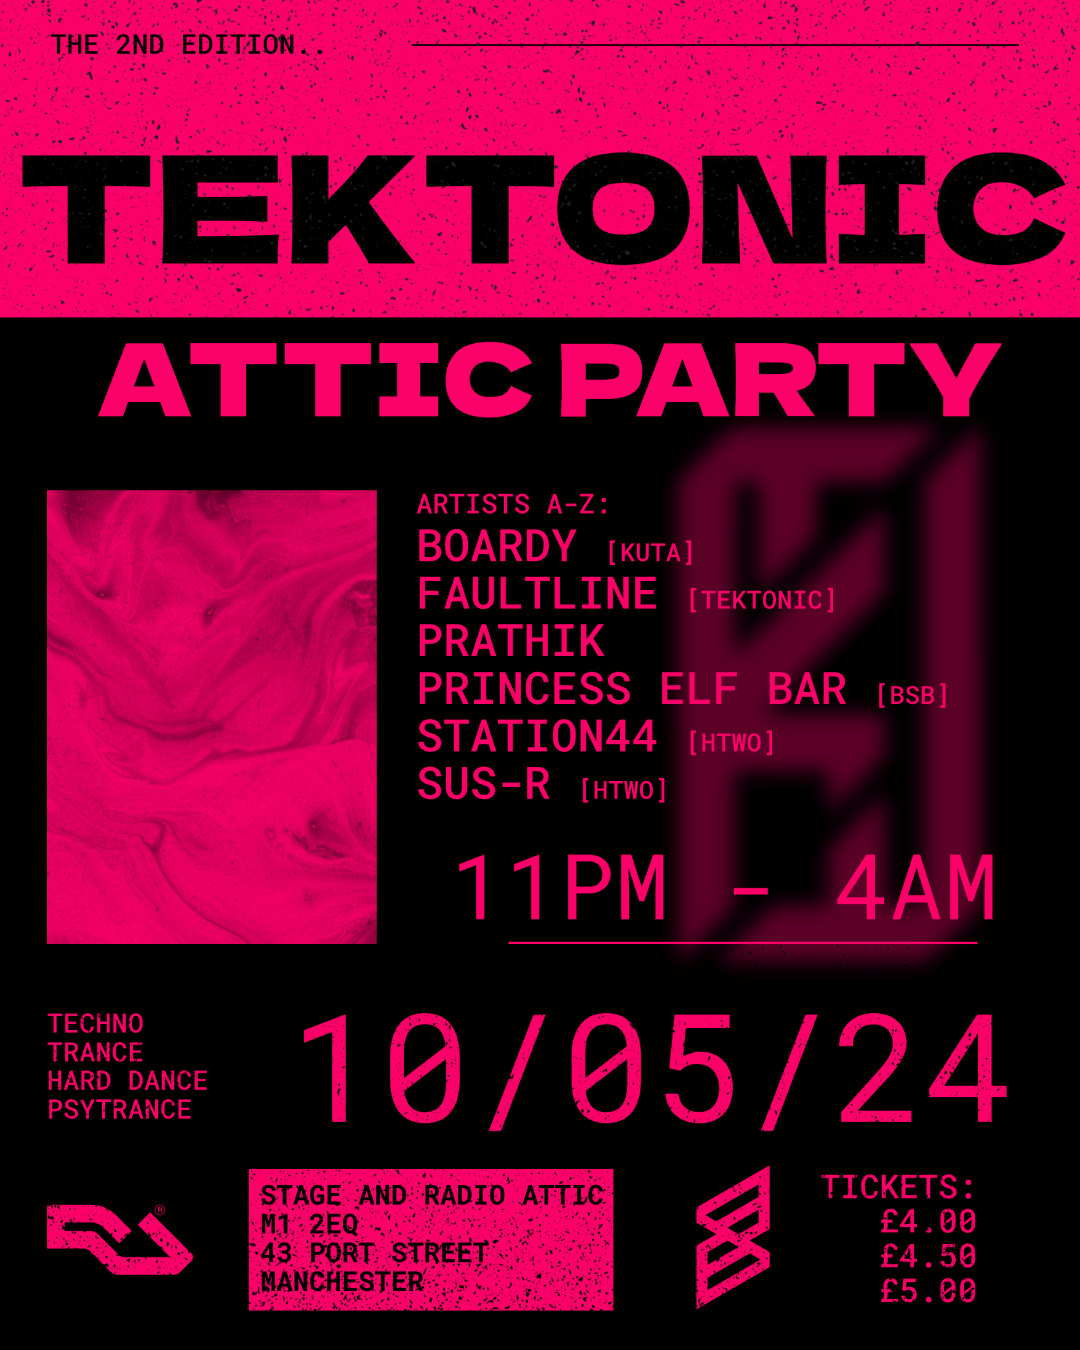 Tektonic Attic Party with Princess Elf Bar, station44, Faultline, Boardy, Prathik, SUS-R - フライヤー表